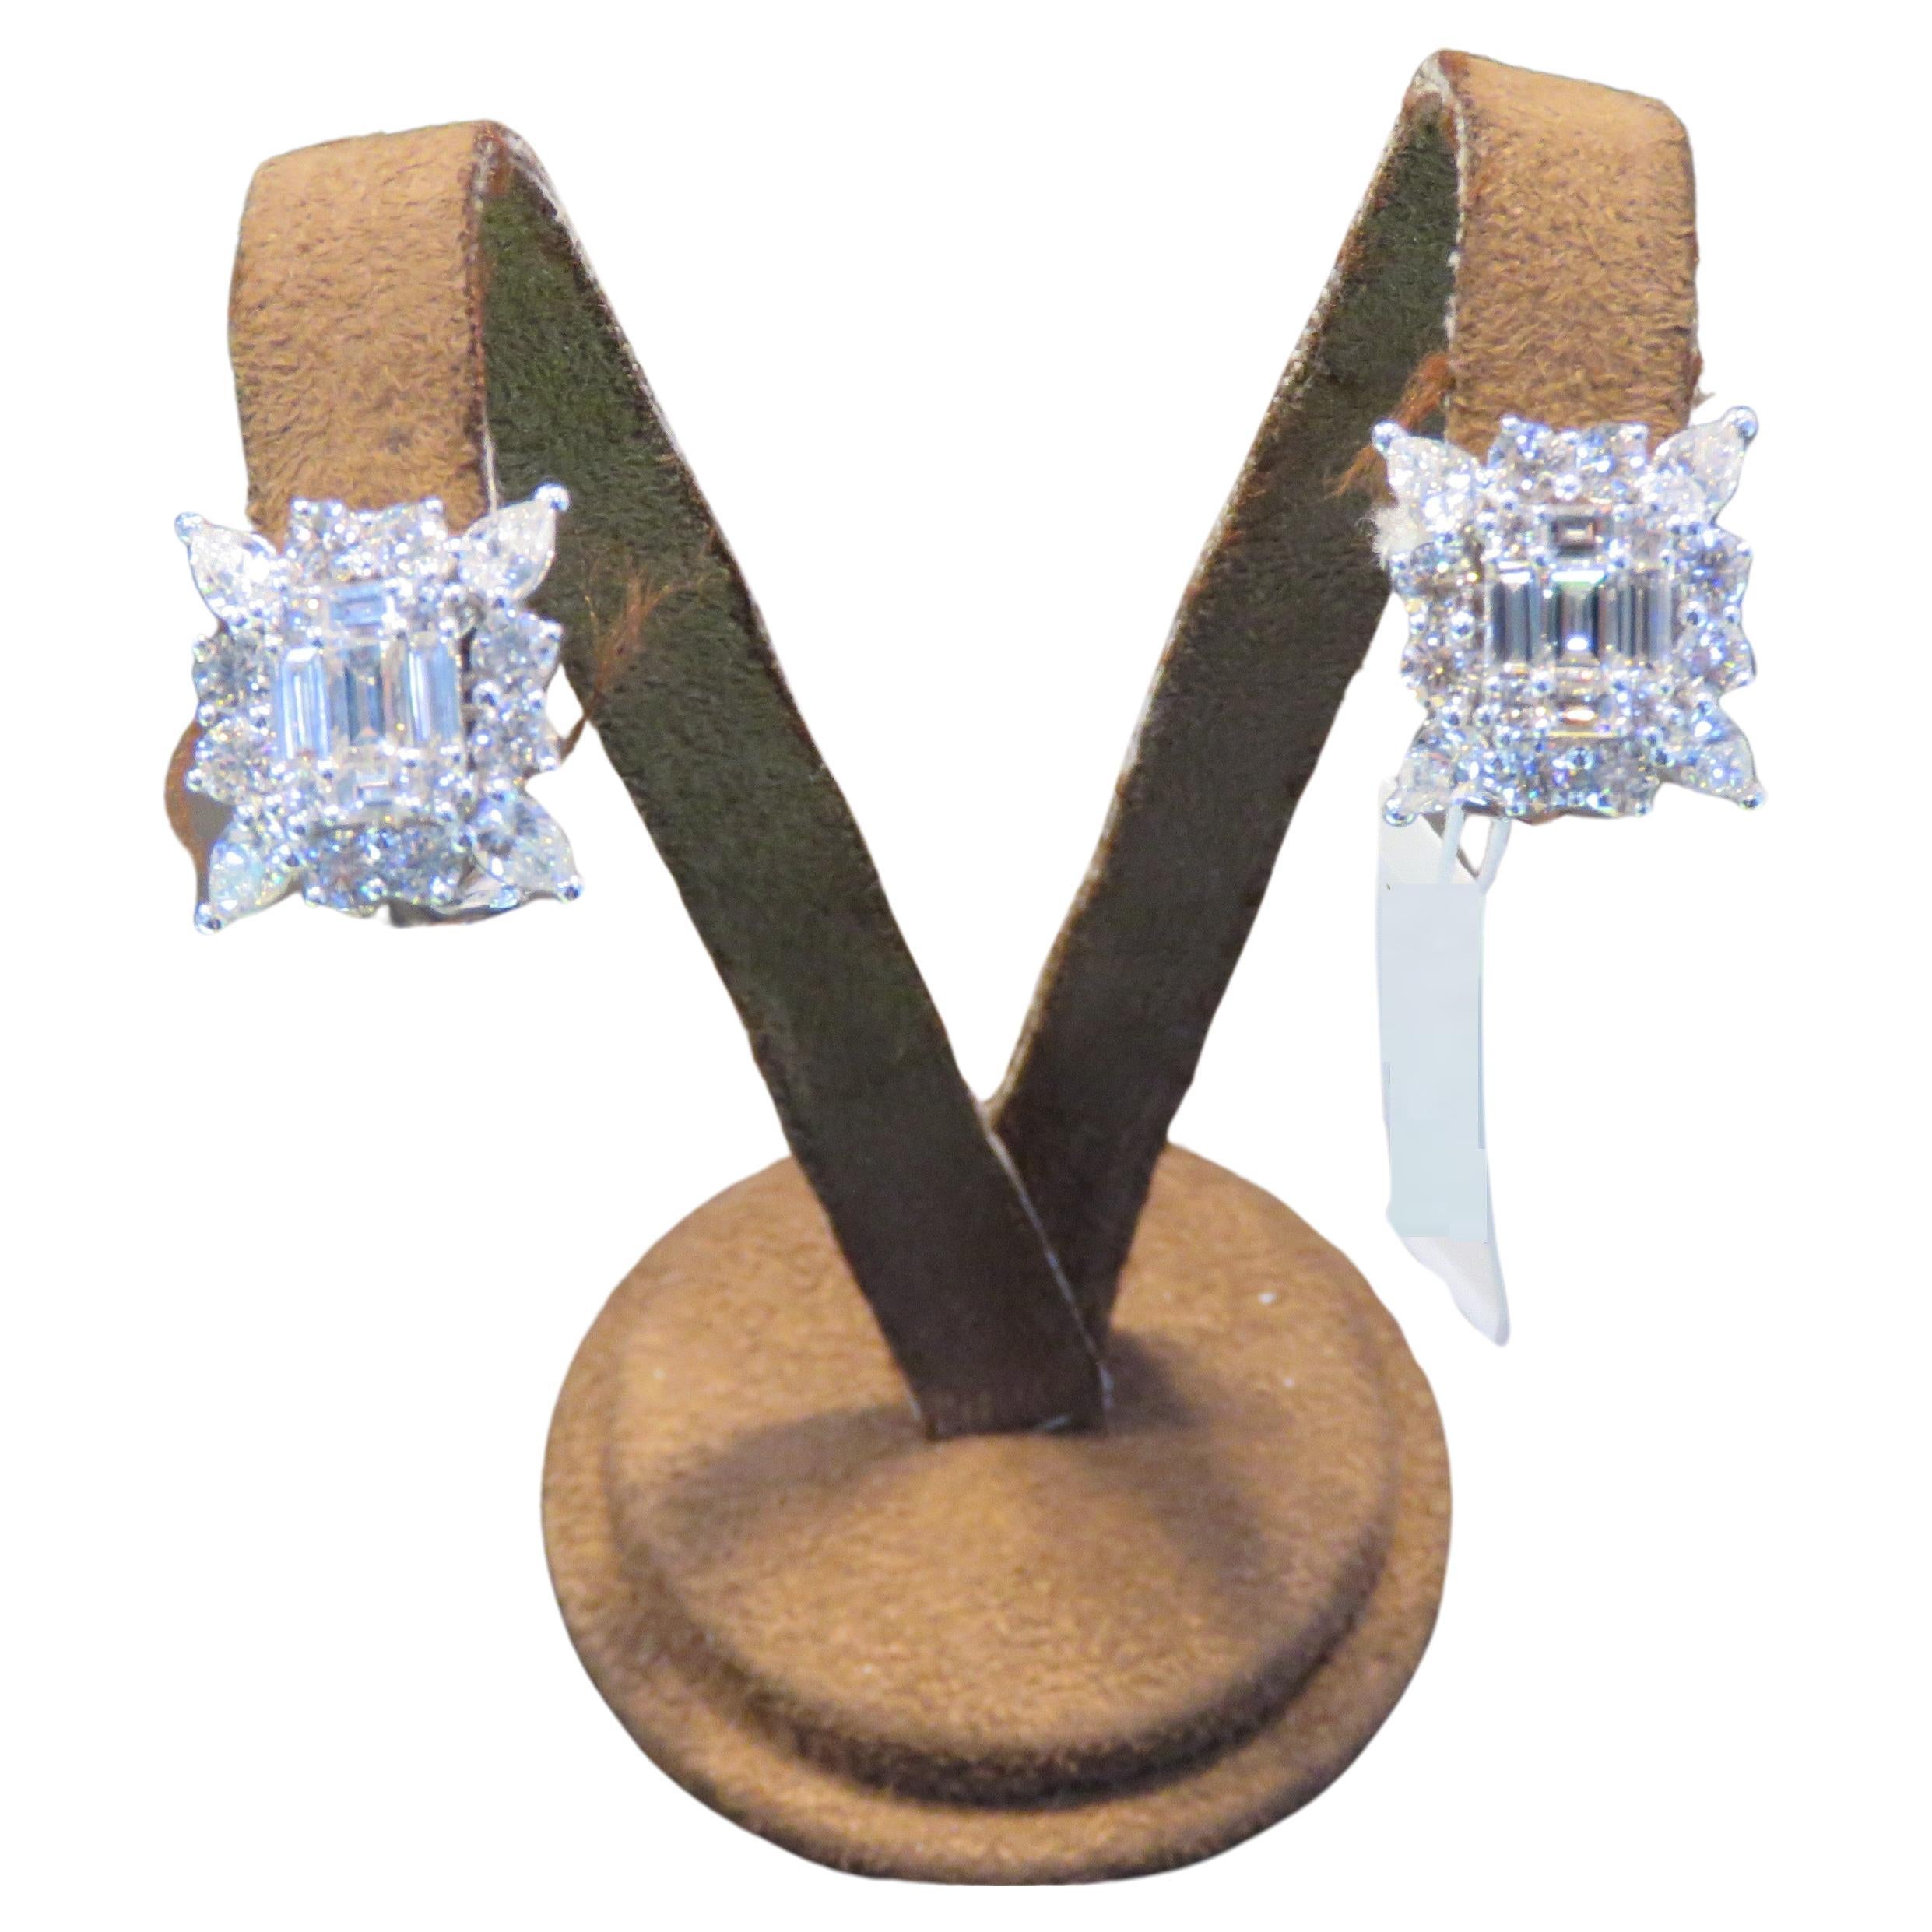 NWT $26, 000 18KT Gold Large Fancy Illusion Glittering Diamond Stud Earrings